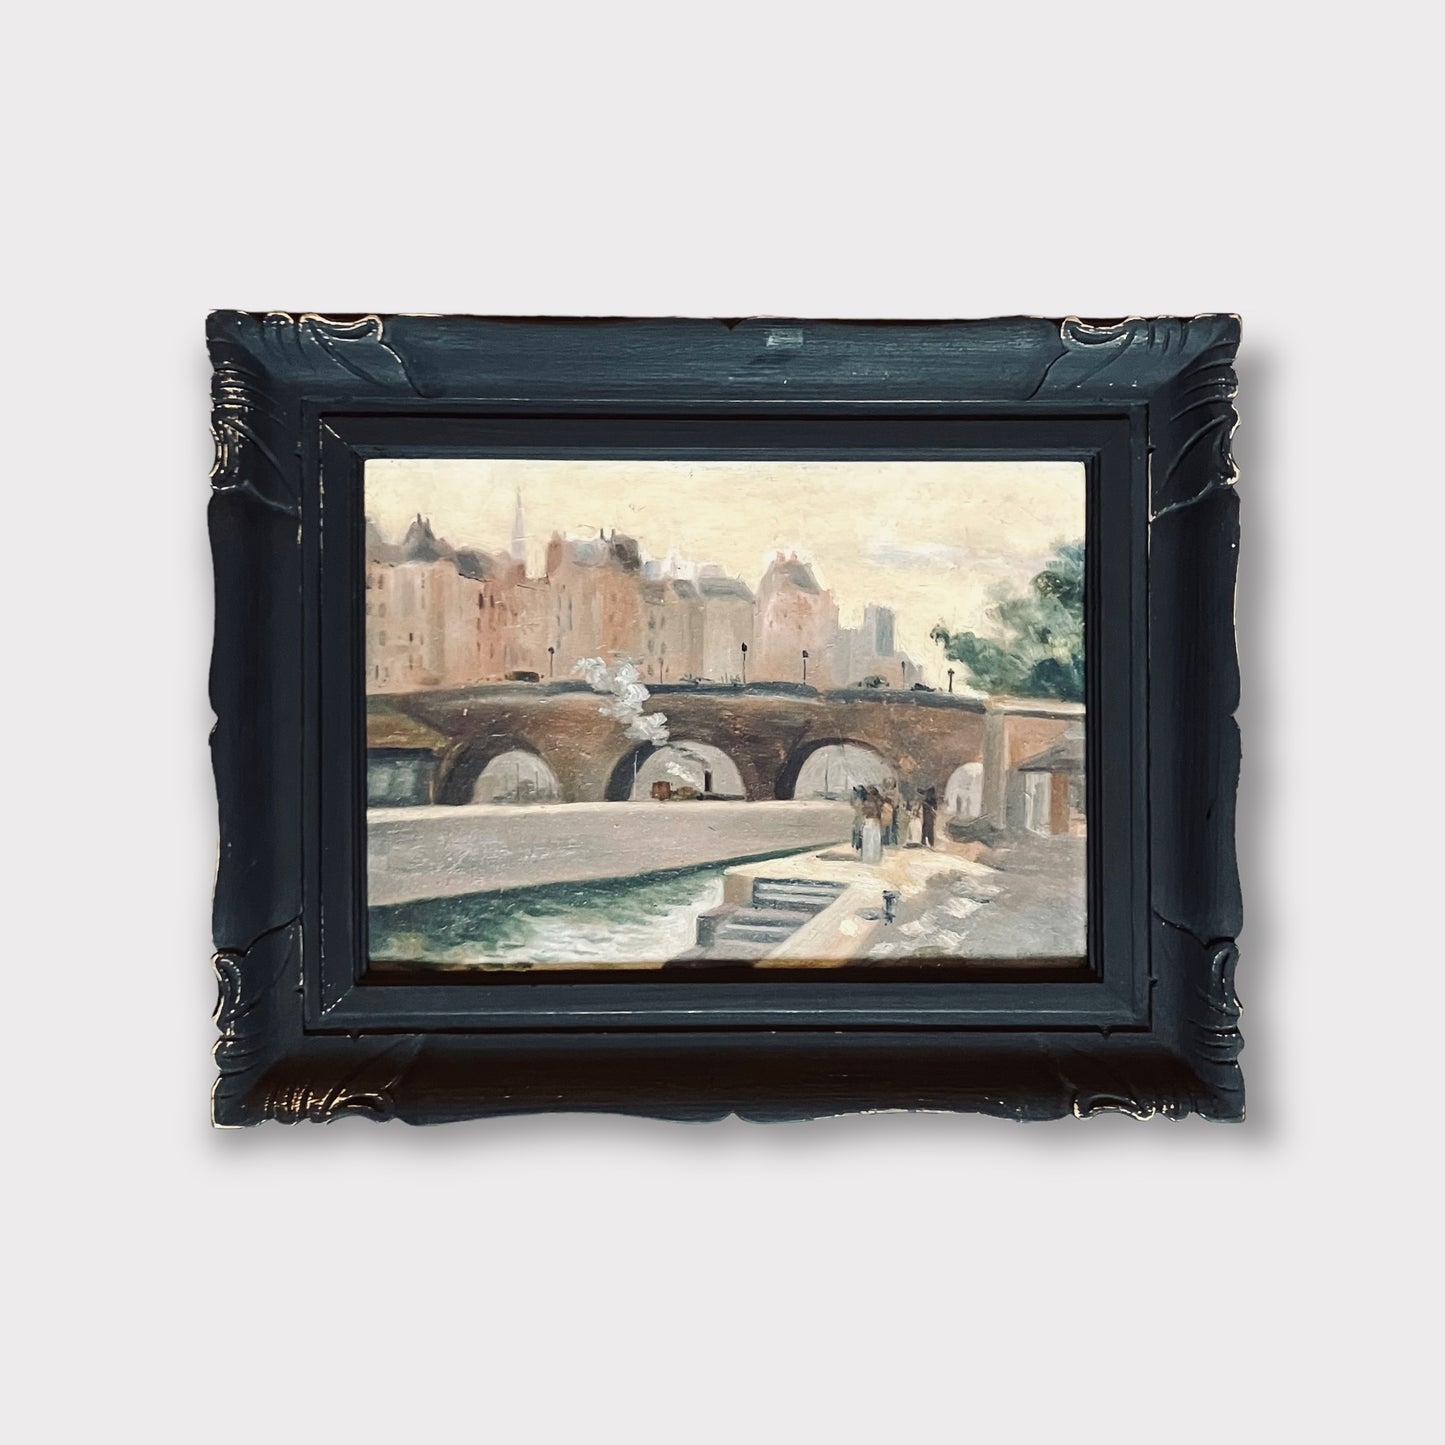 ‘Le Havre France’ Original Oil Painting